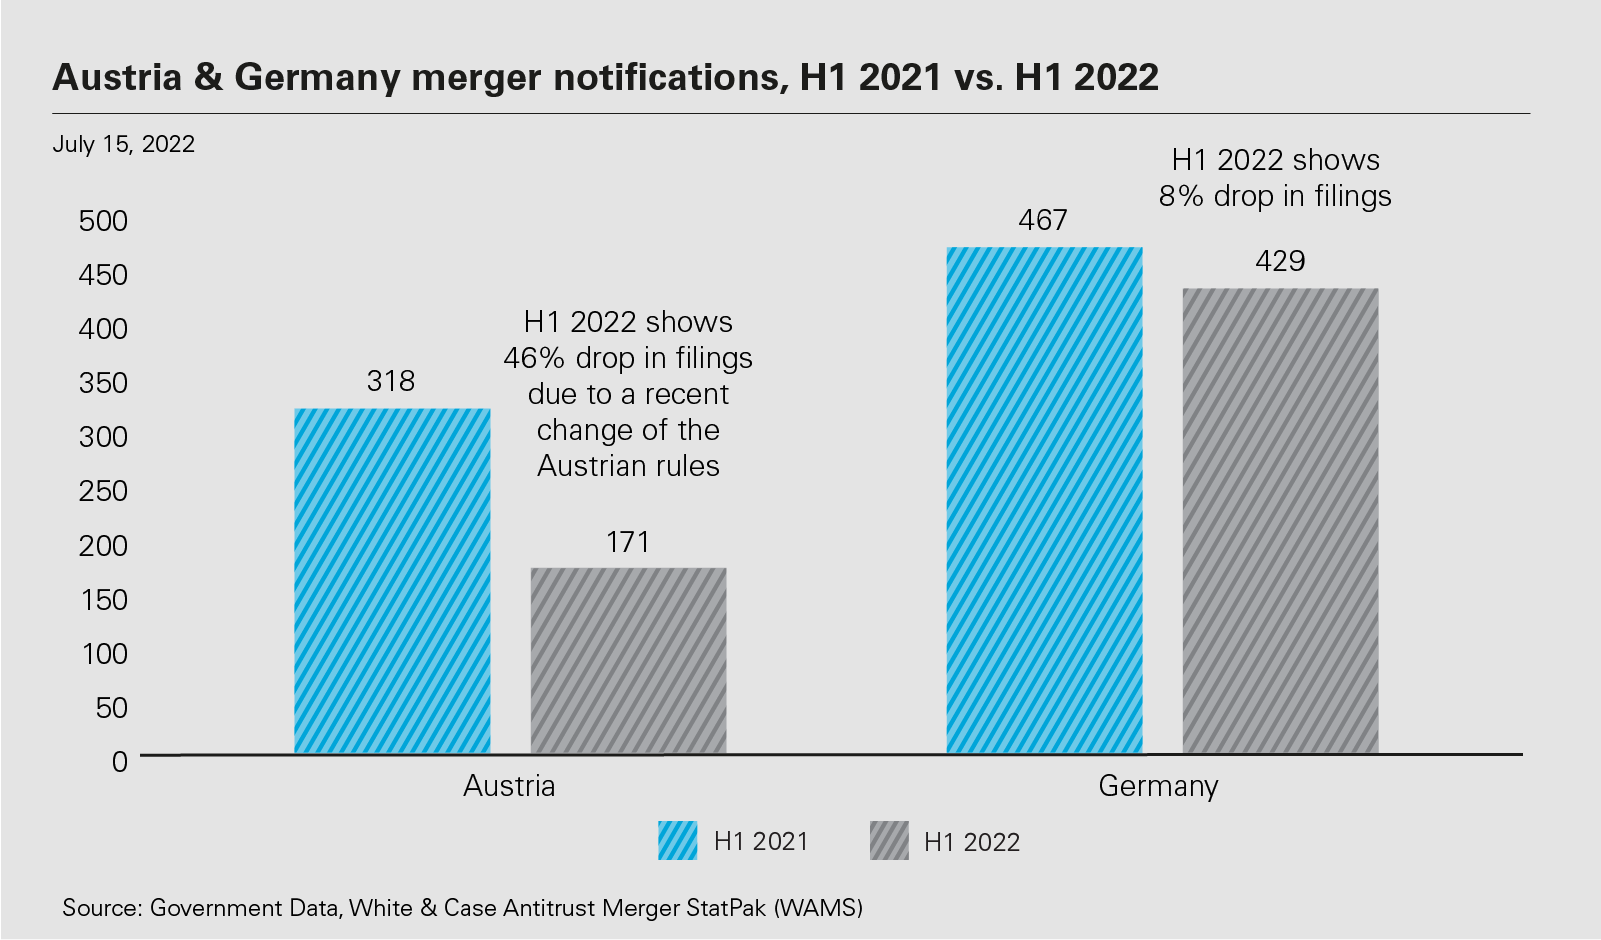 Austria & Germany merger notifications, H1 2021 vs. H1 2022